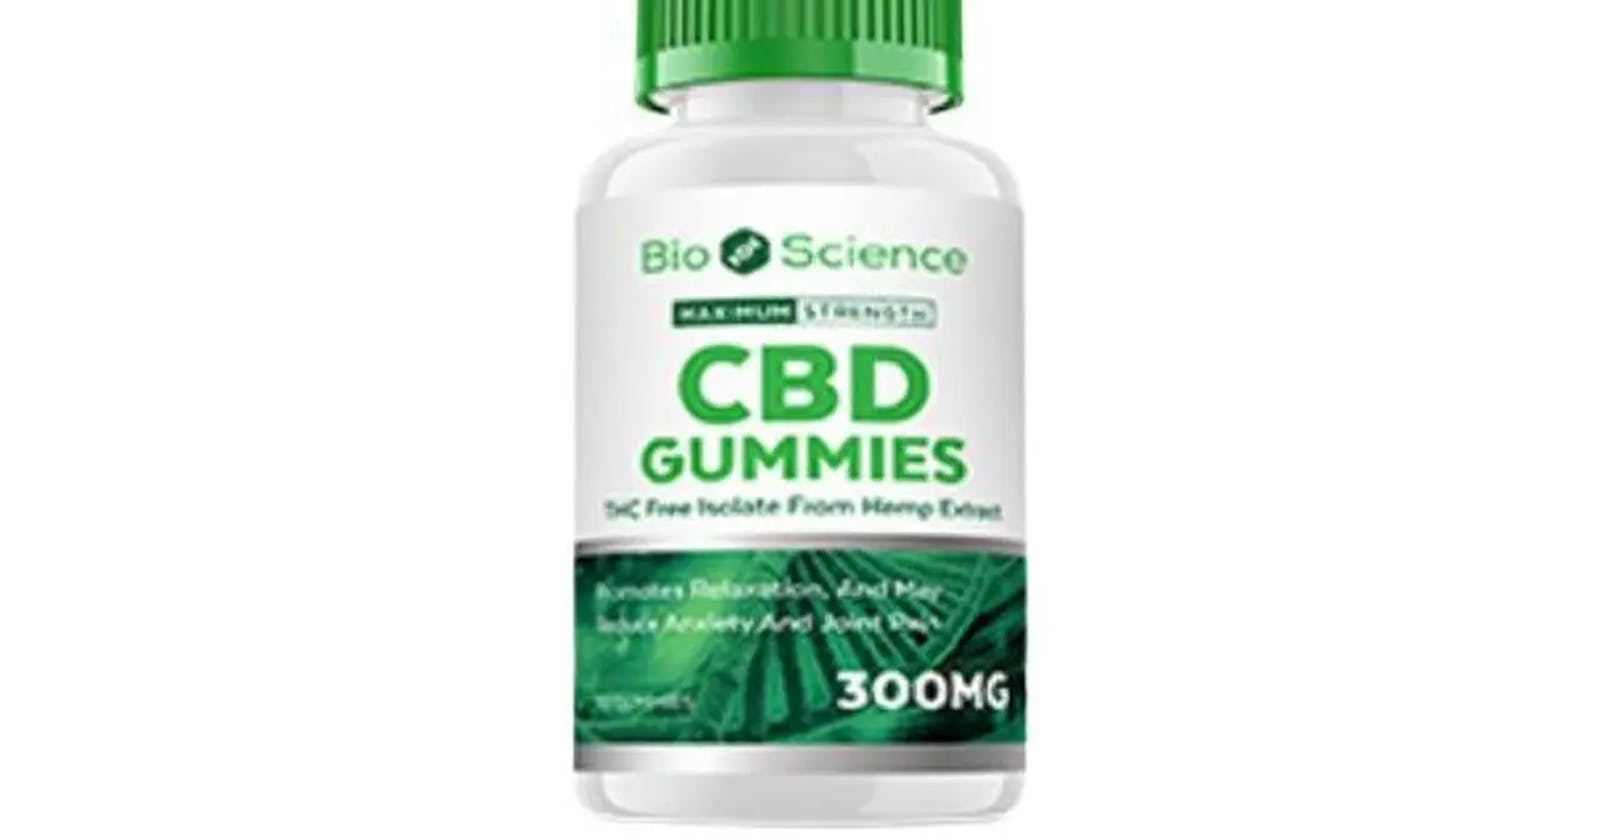 BioScience CBD Gummies Price, Reviews, Ingredients